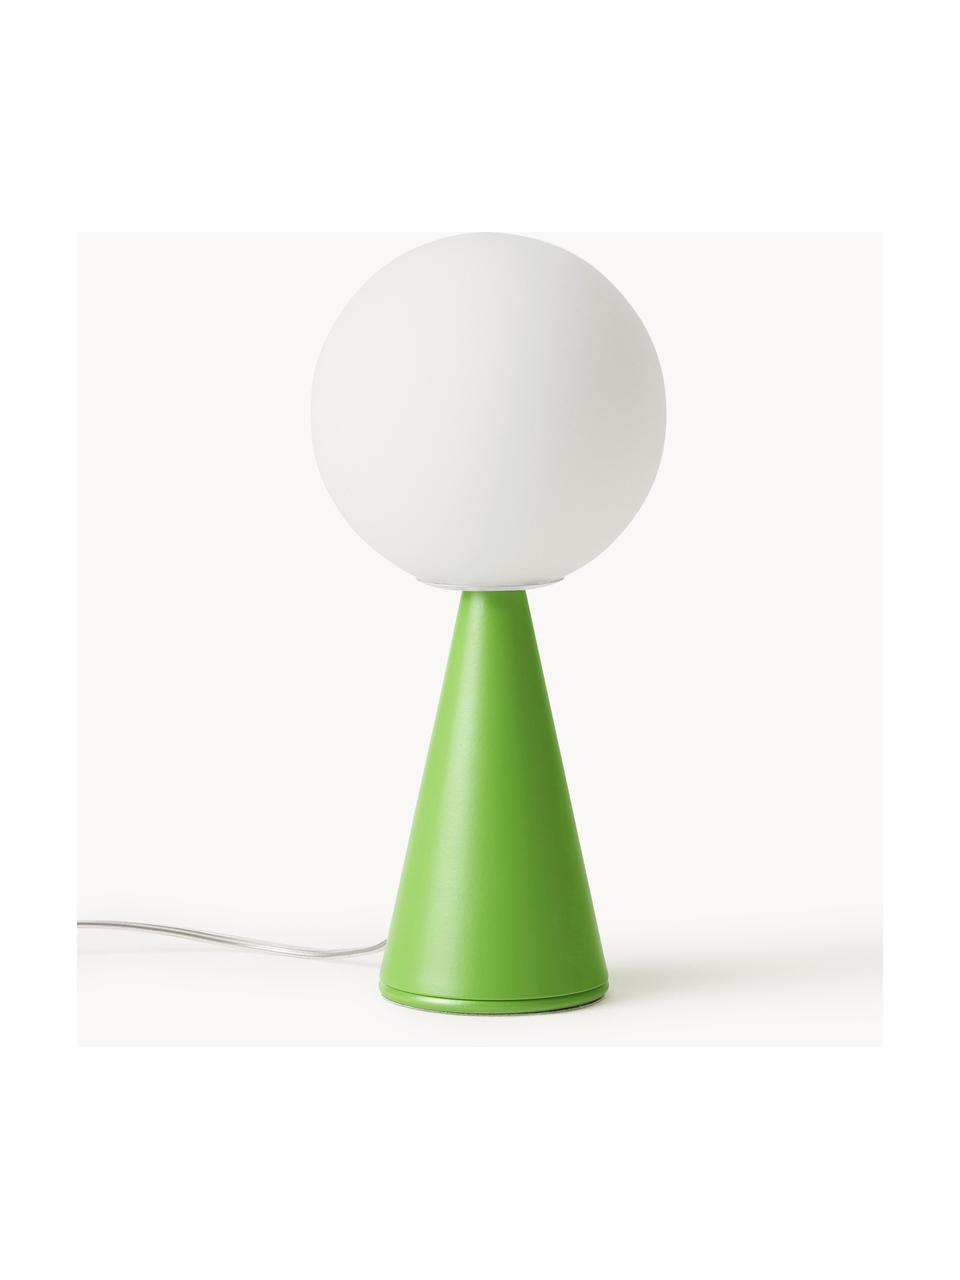 Petite lampe à poser artisanale Bilia, Blanc, vert, Ø 12 x haut. 26 cm